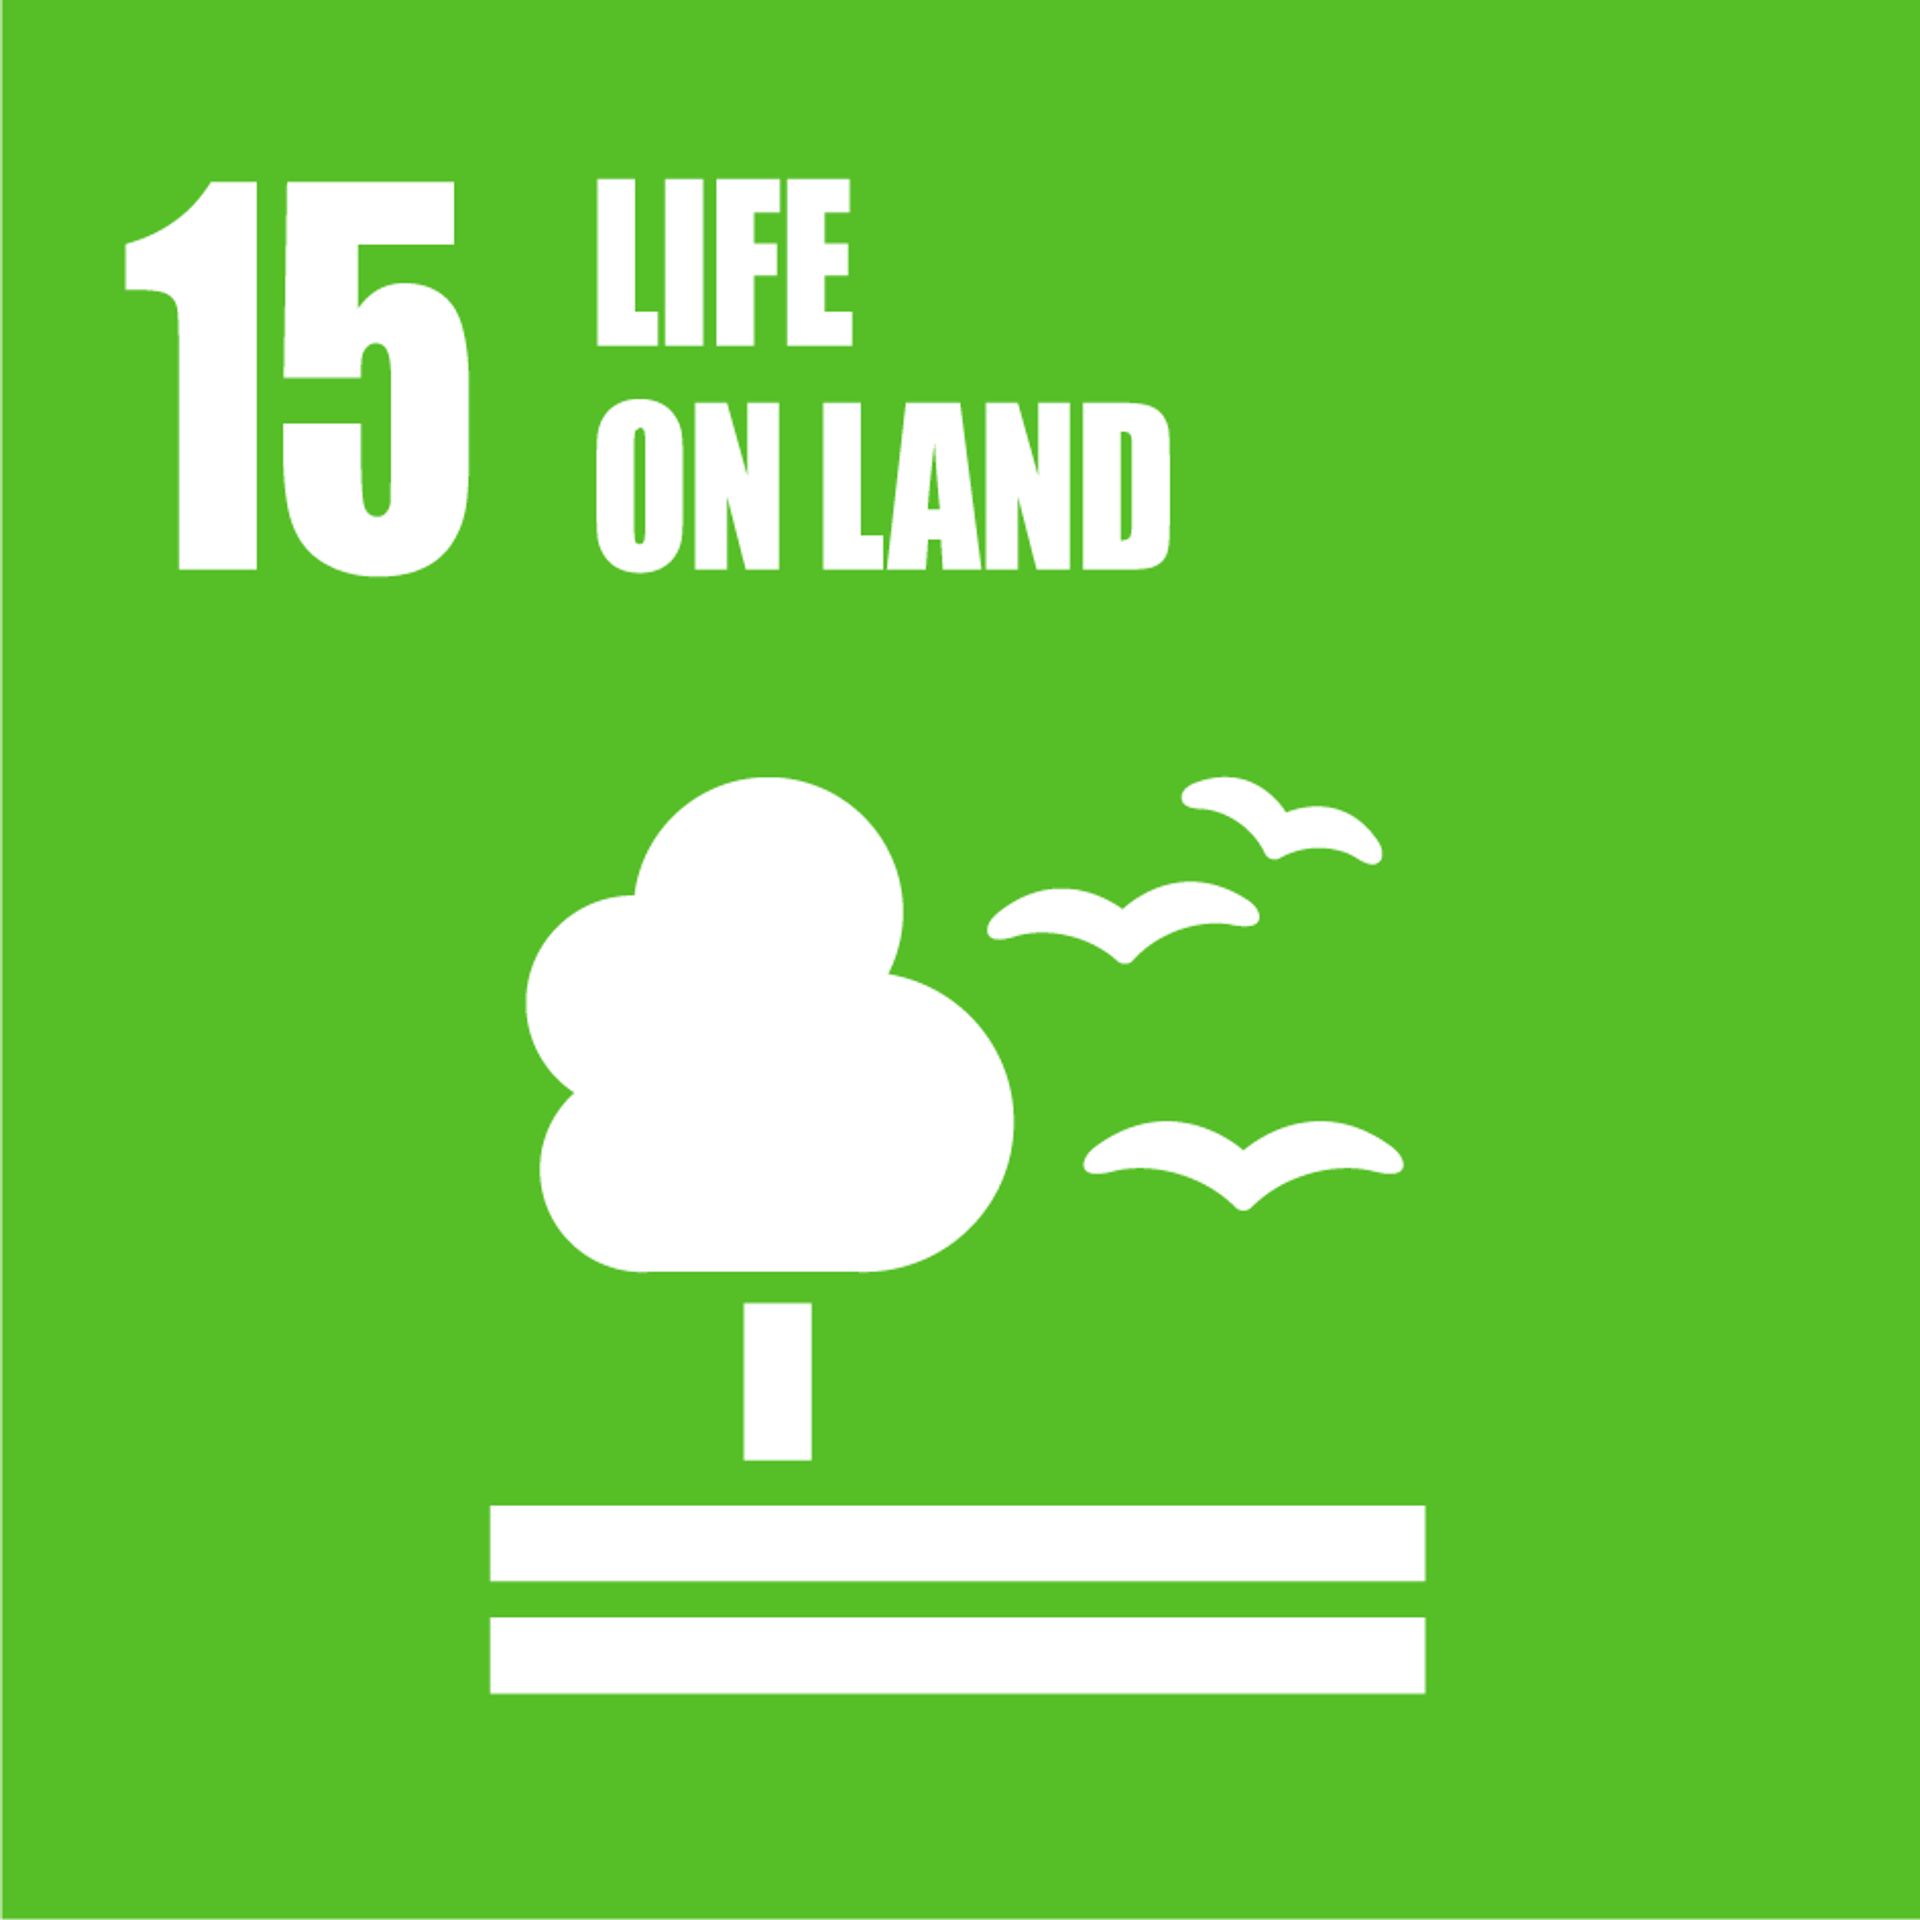 Sustainable Development Goal 15